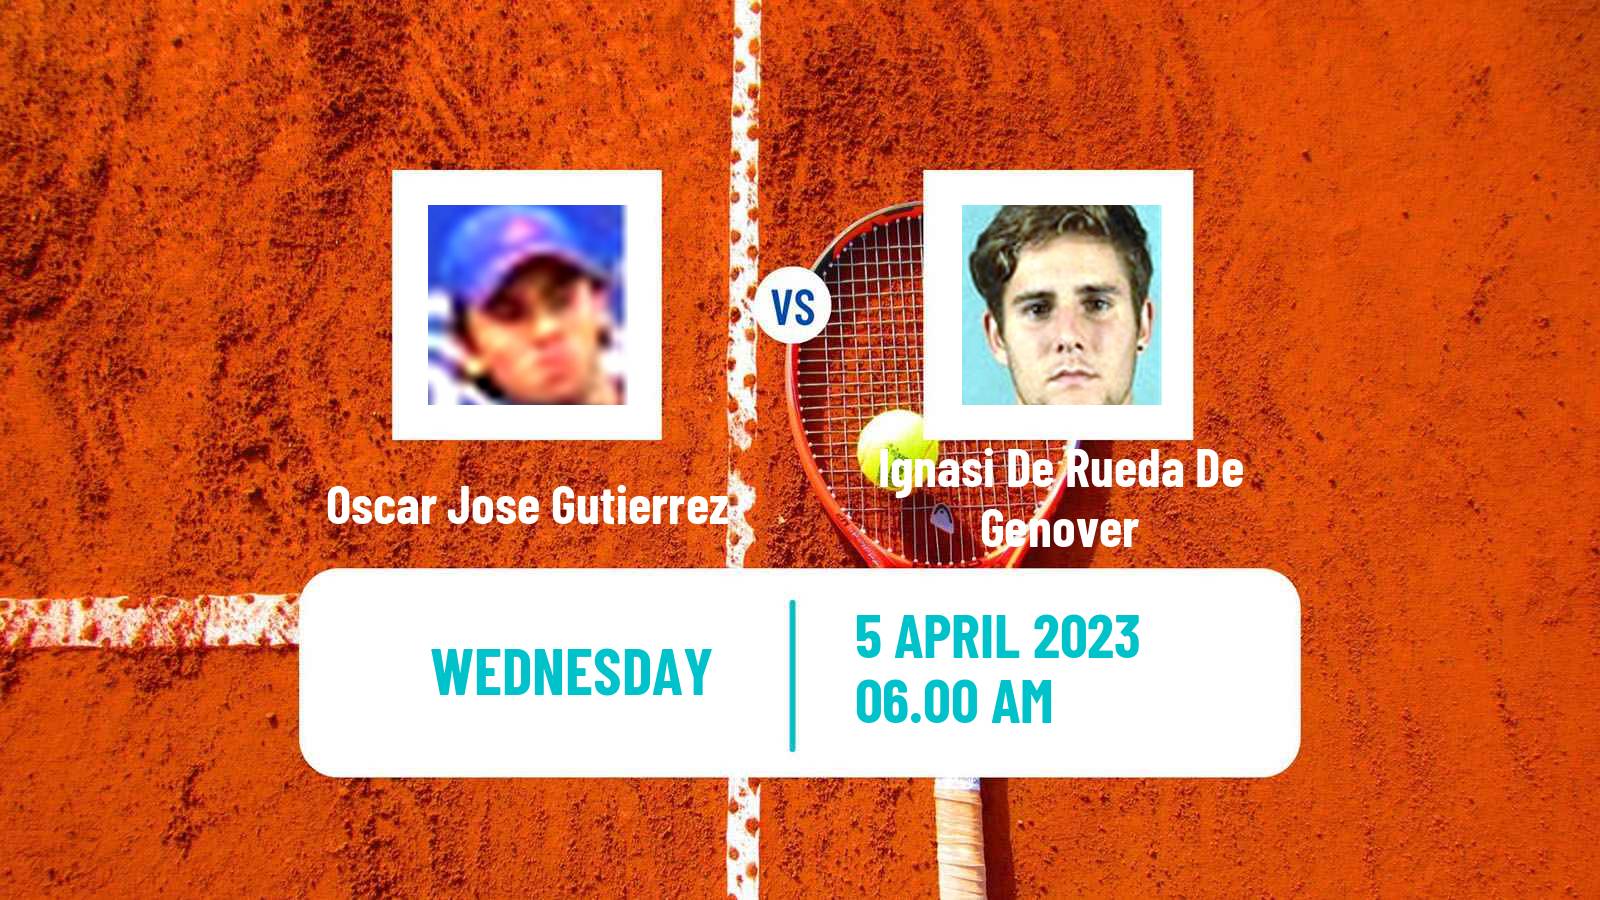 Tennis ITF Tournaments Oscar Jose Gutierrez - Ignasi De Rueda De Genover